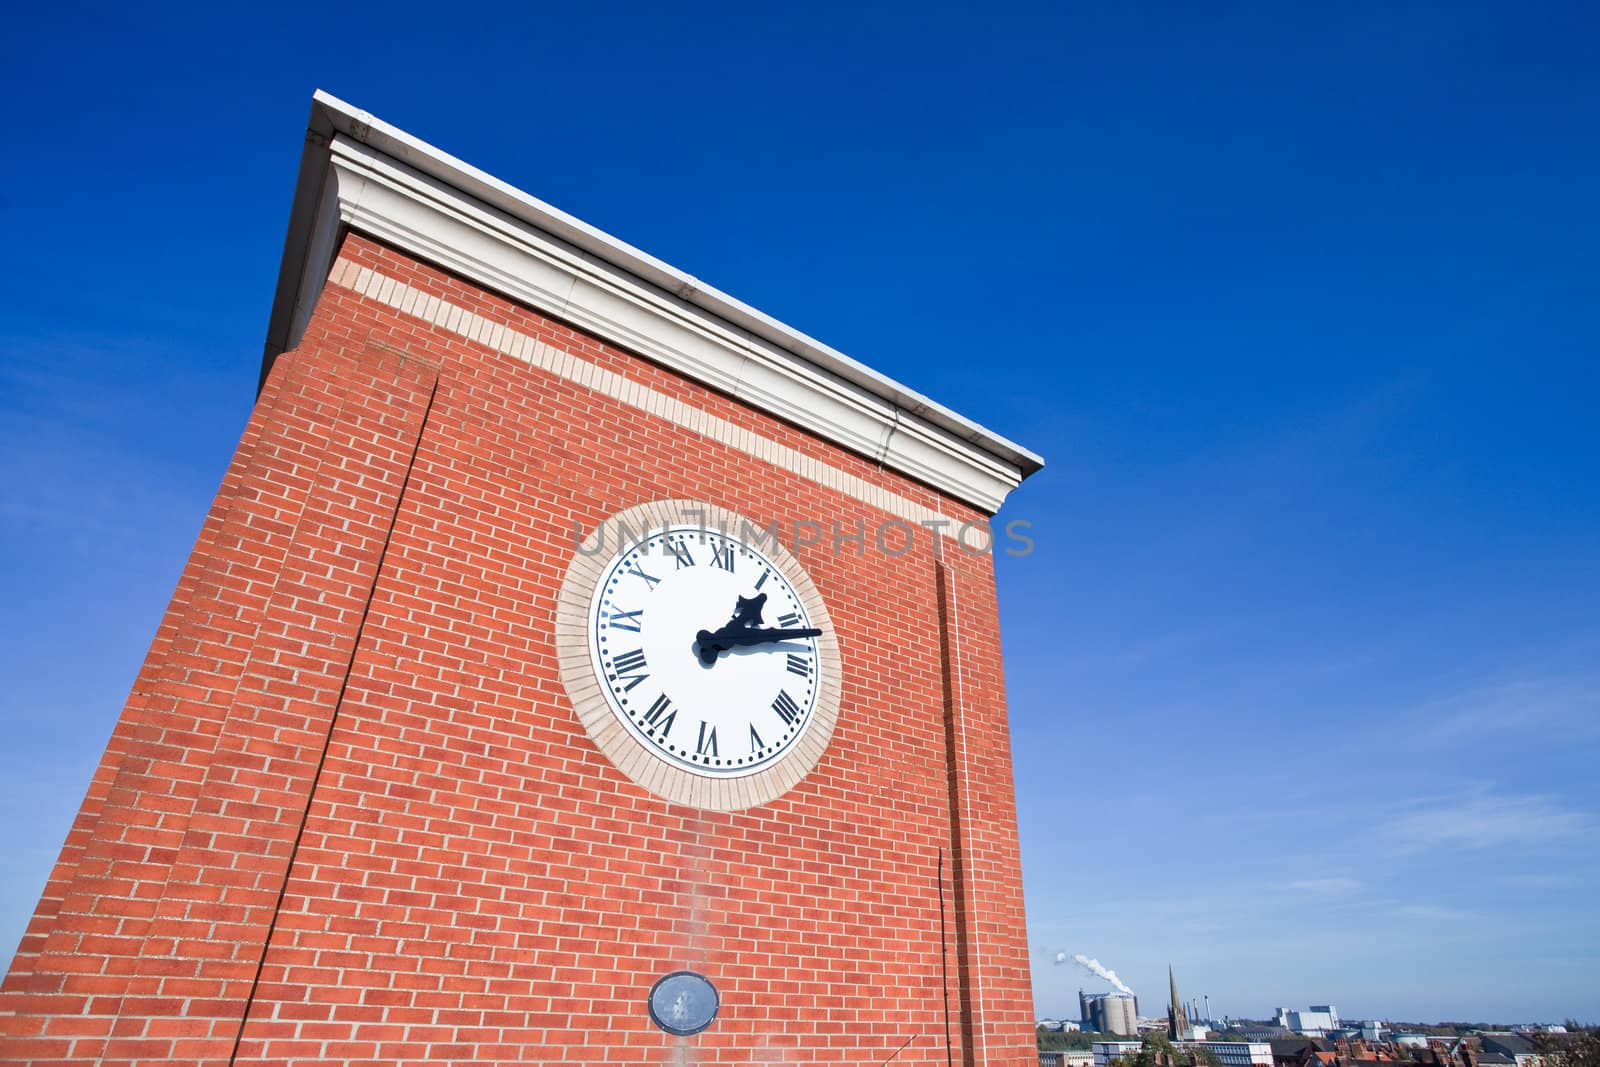 A modern clock tower against a vibrant blue sky